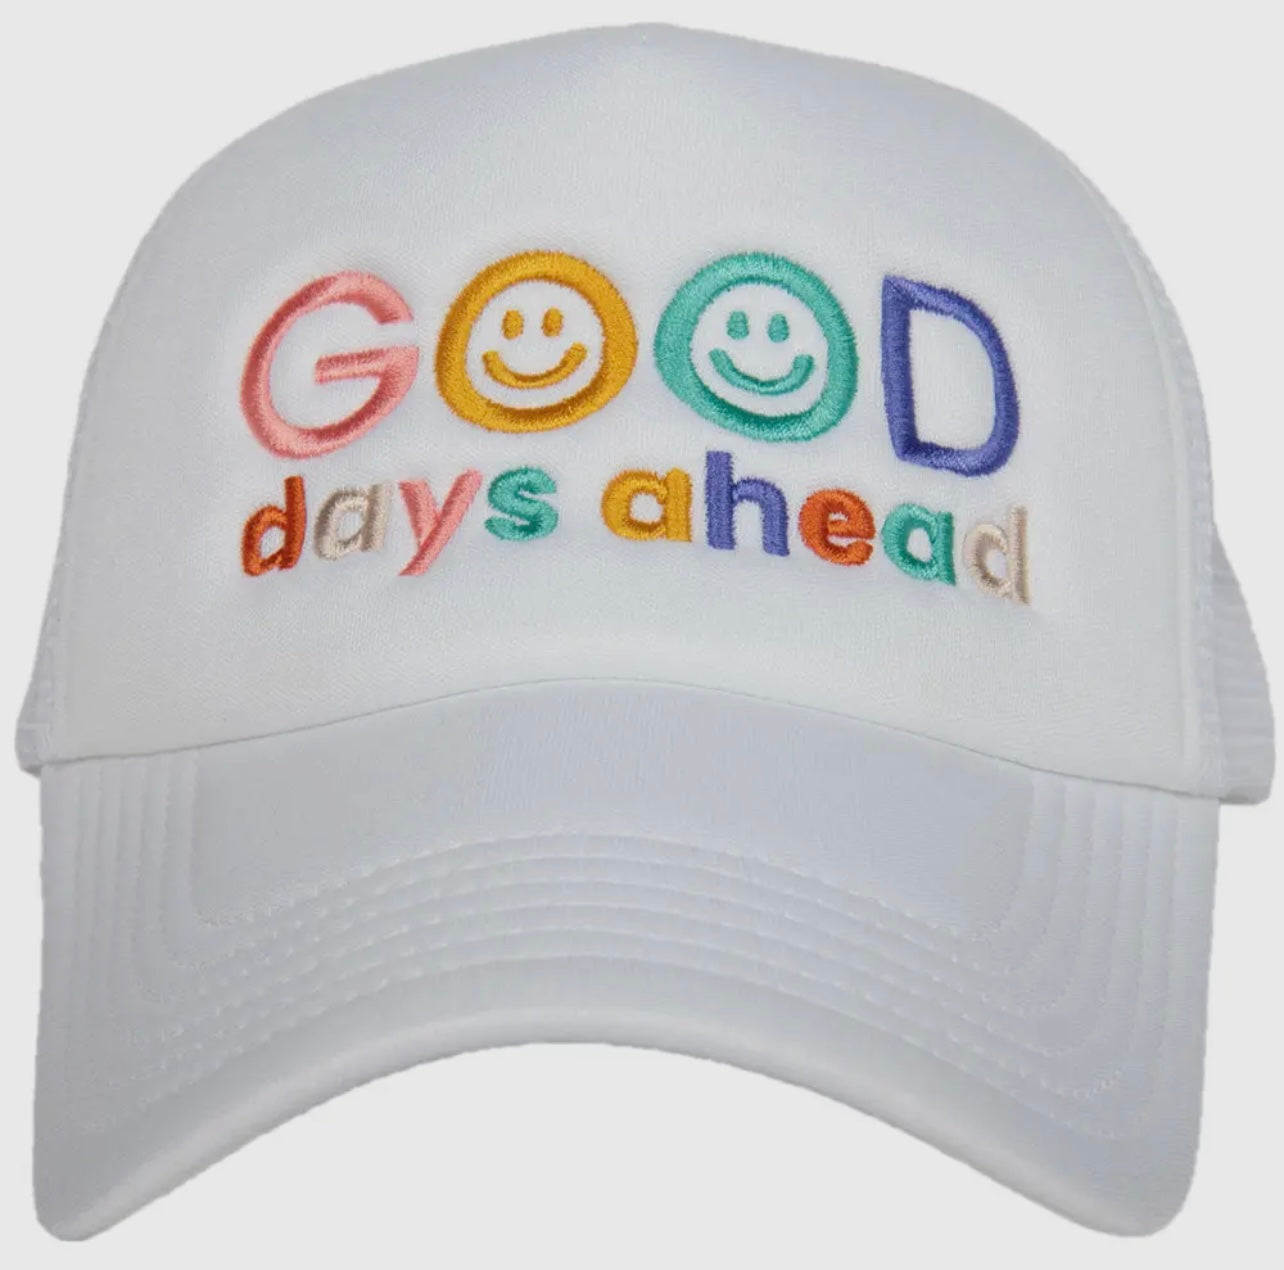 Good Days Ahead Tricker Hat